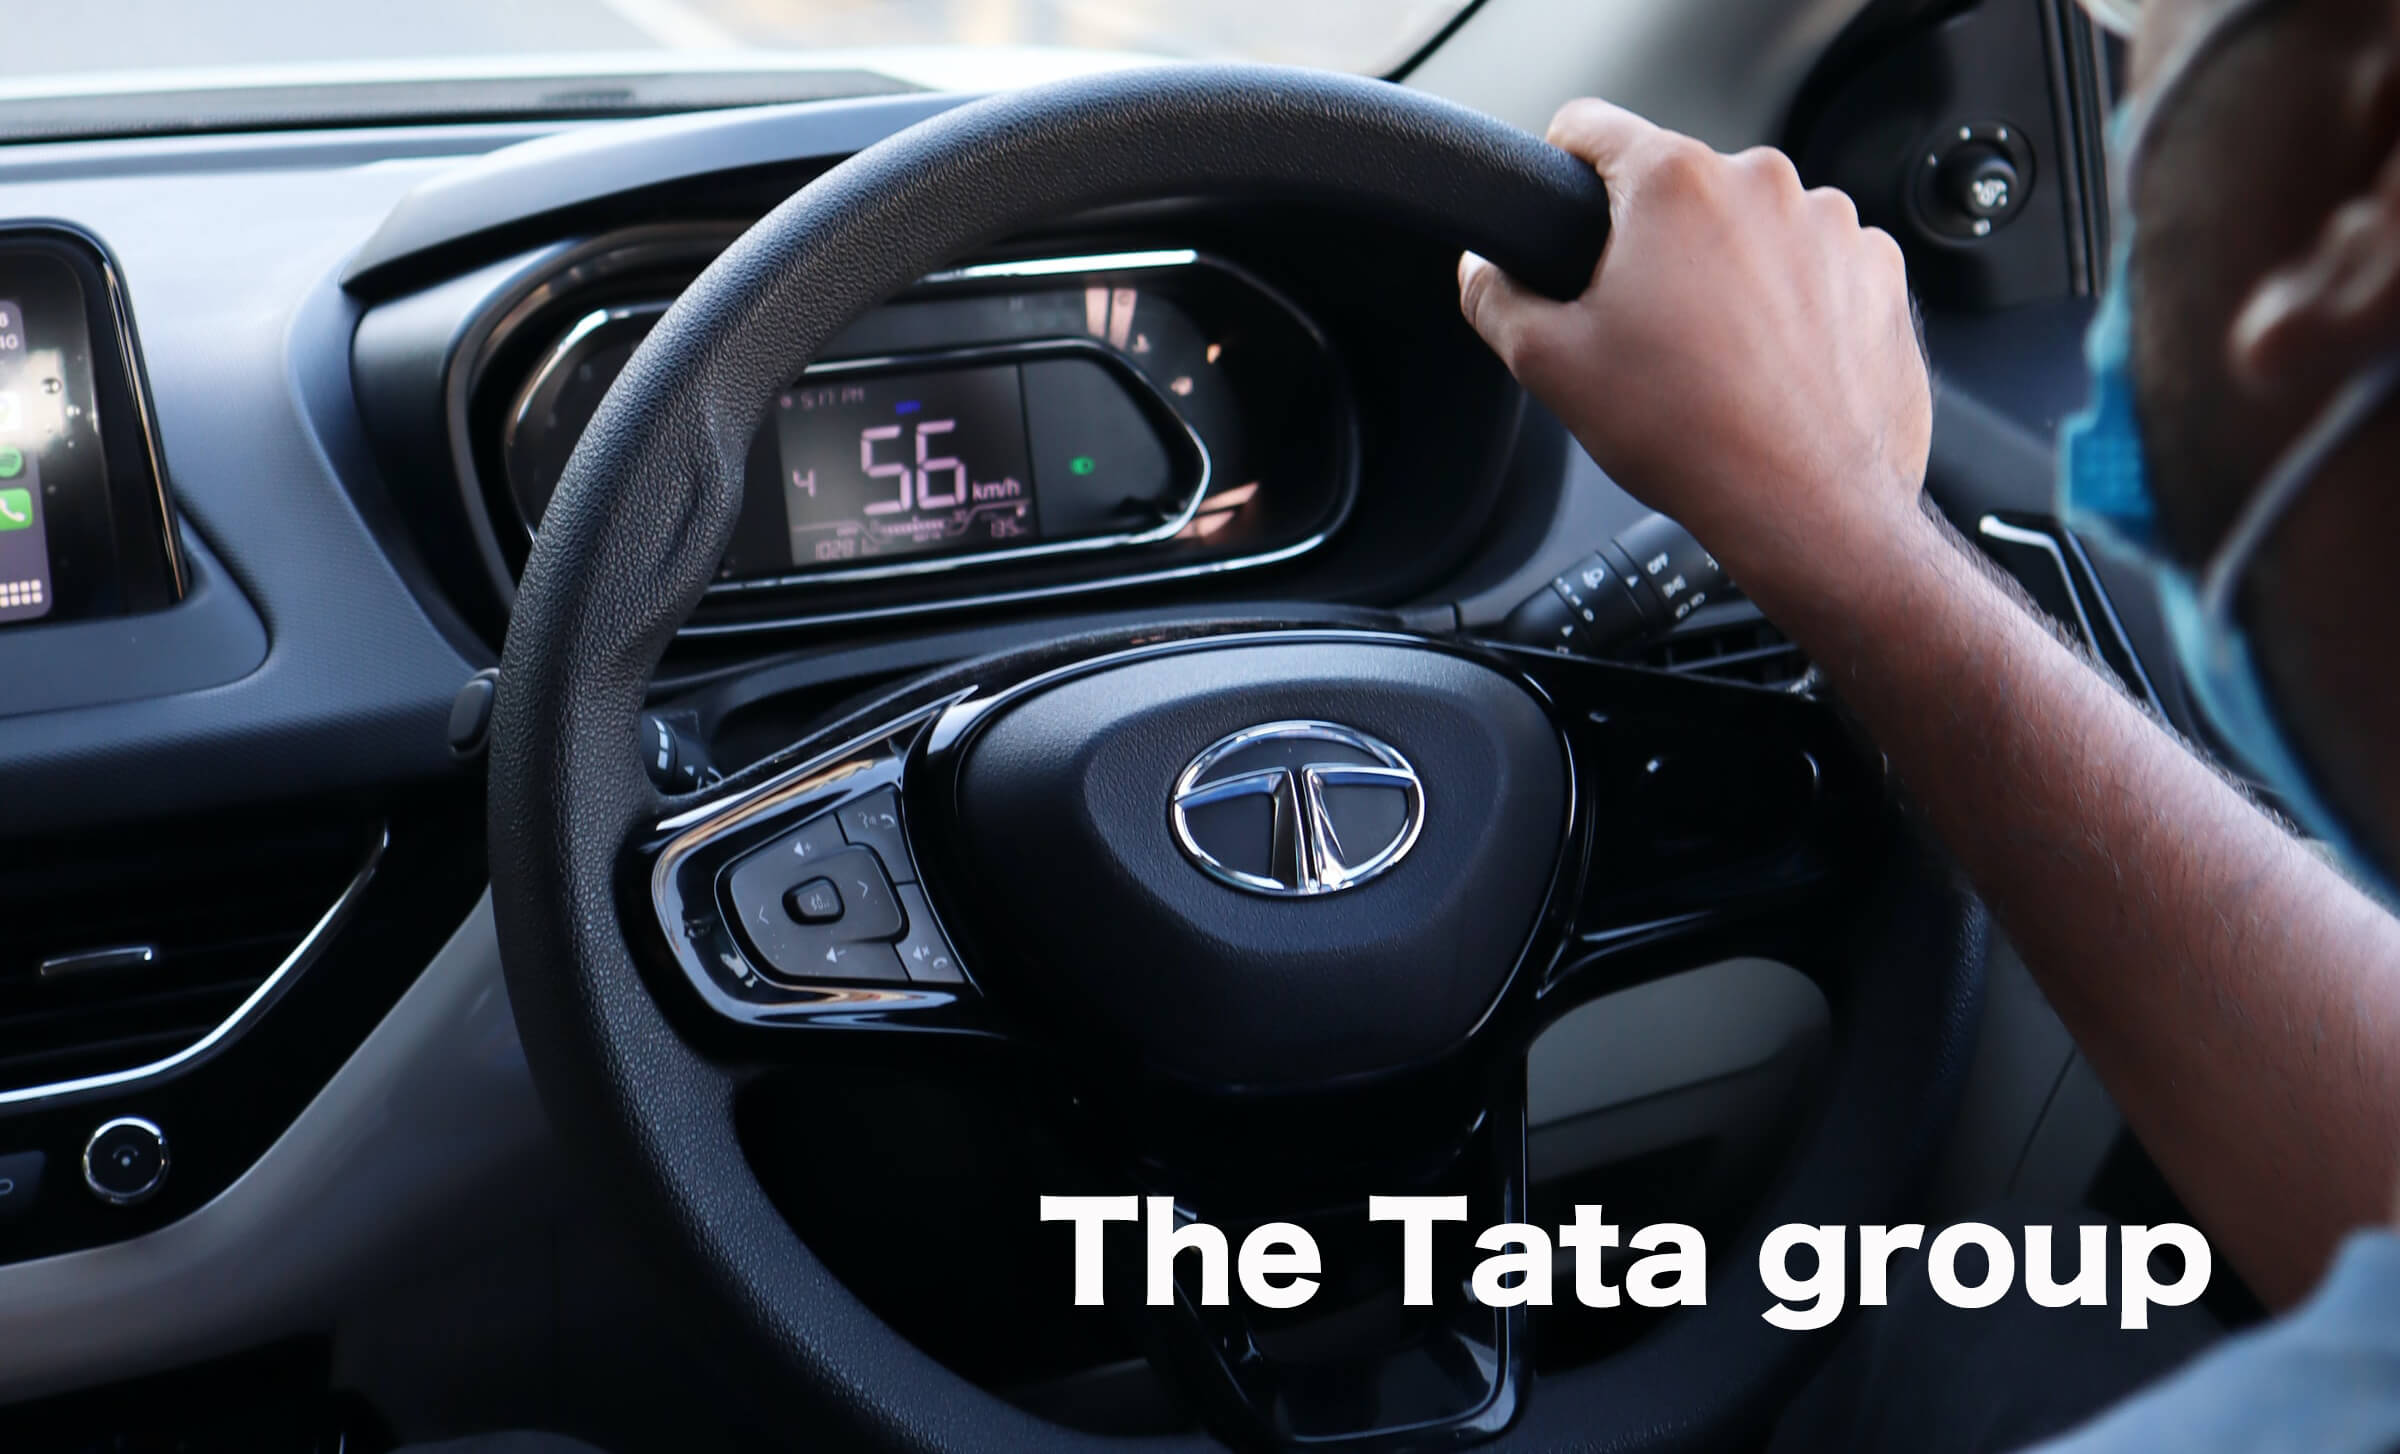 The Tata group